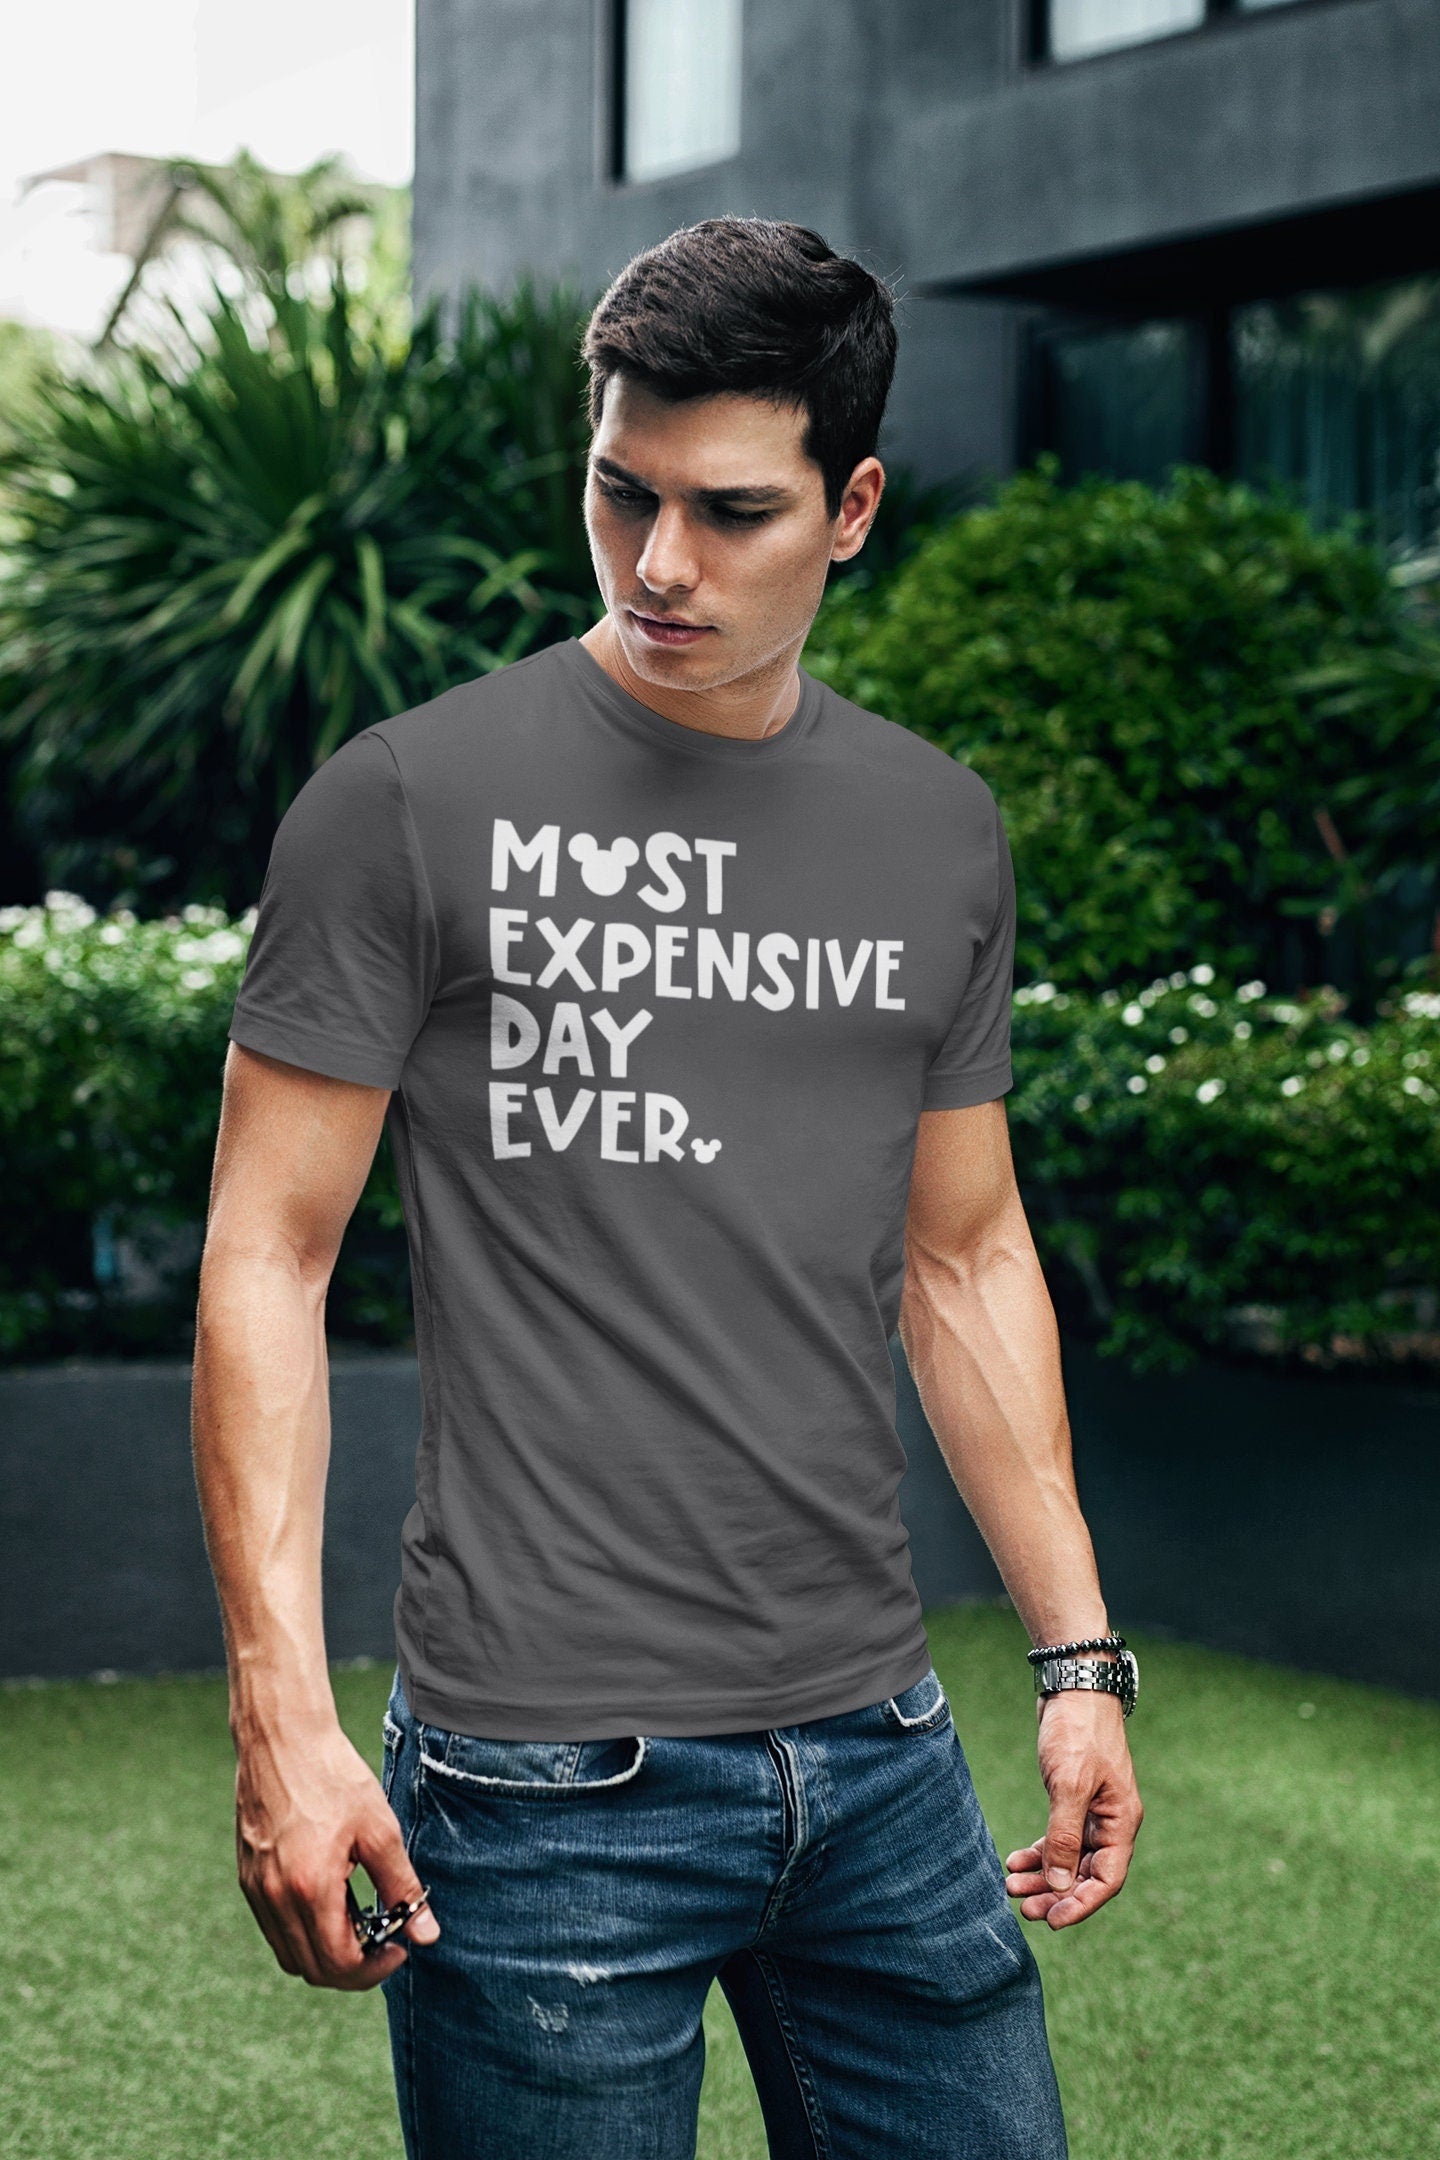 Most Expensive Day Ever Shirt, Disney Men's Shirts, Guys Shirts, Disney Trip Shirt, Disney Vacation, Funny Disney Shirts